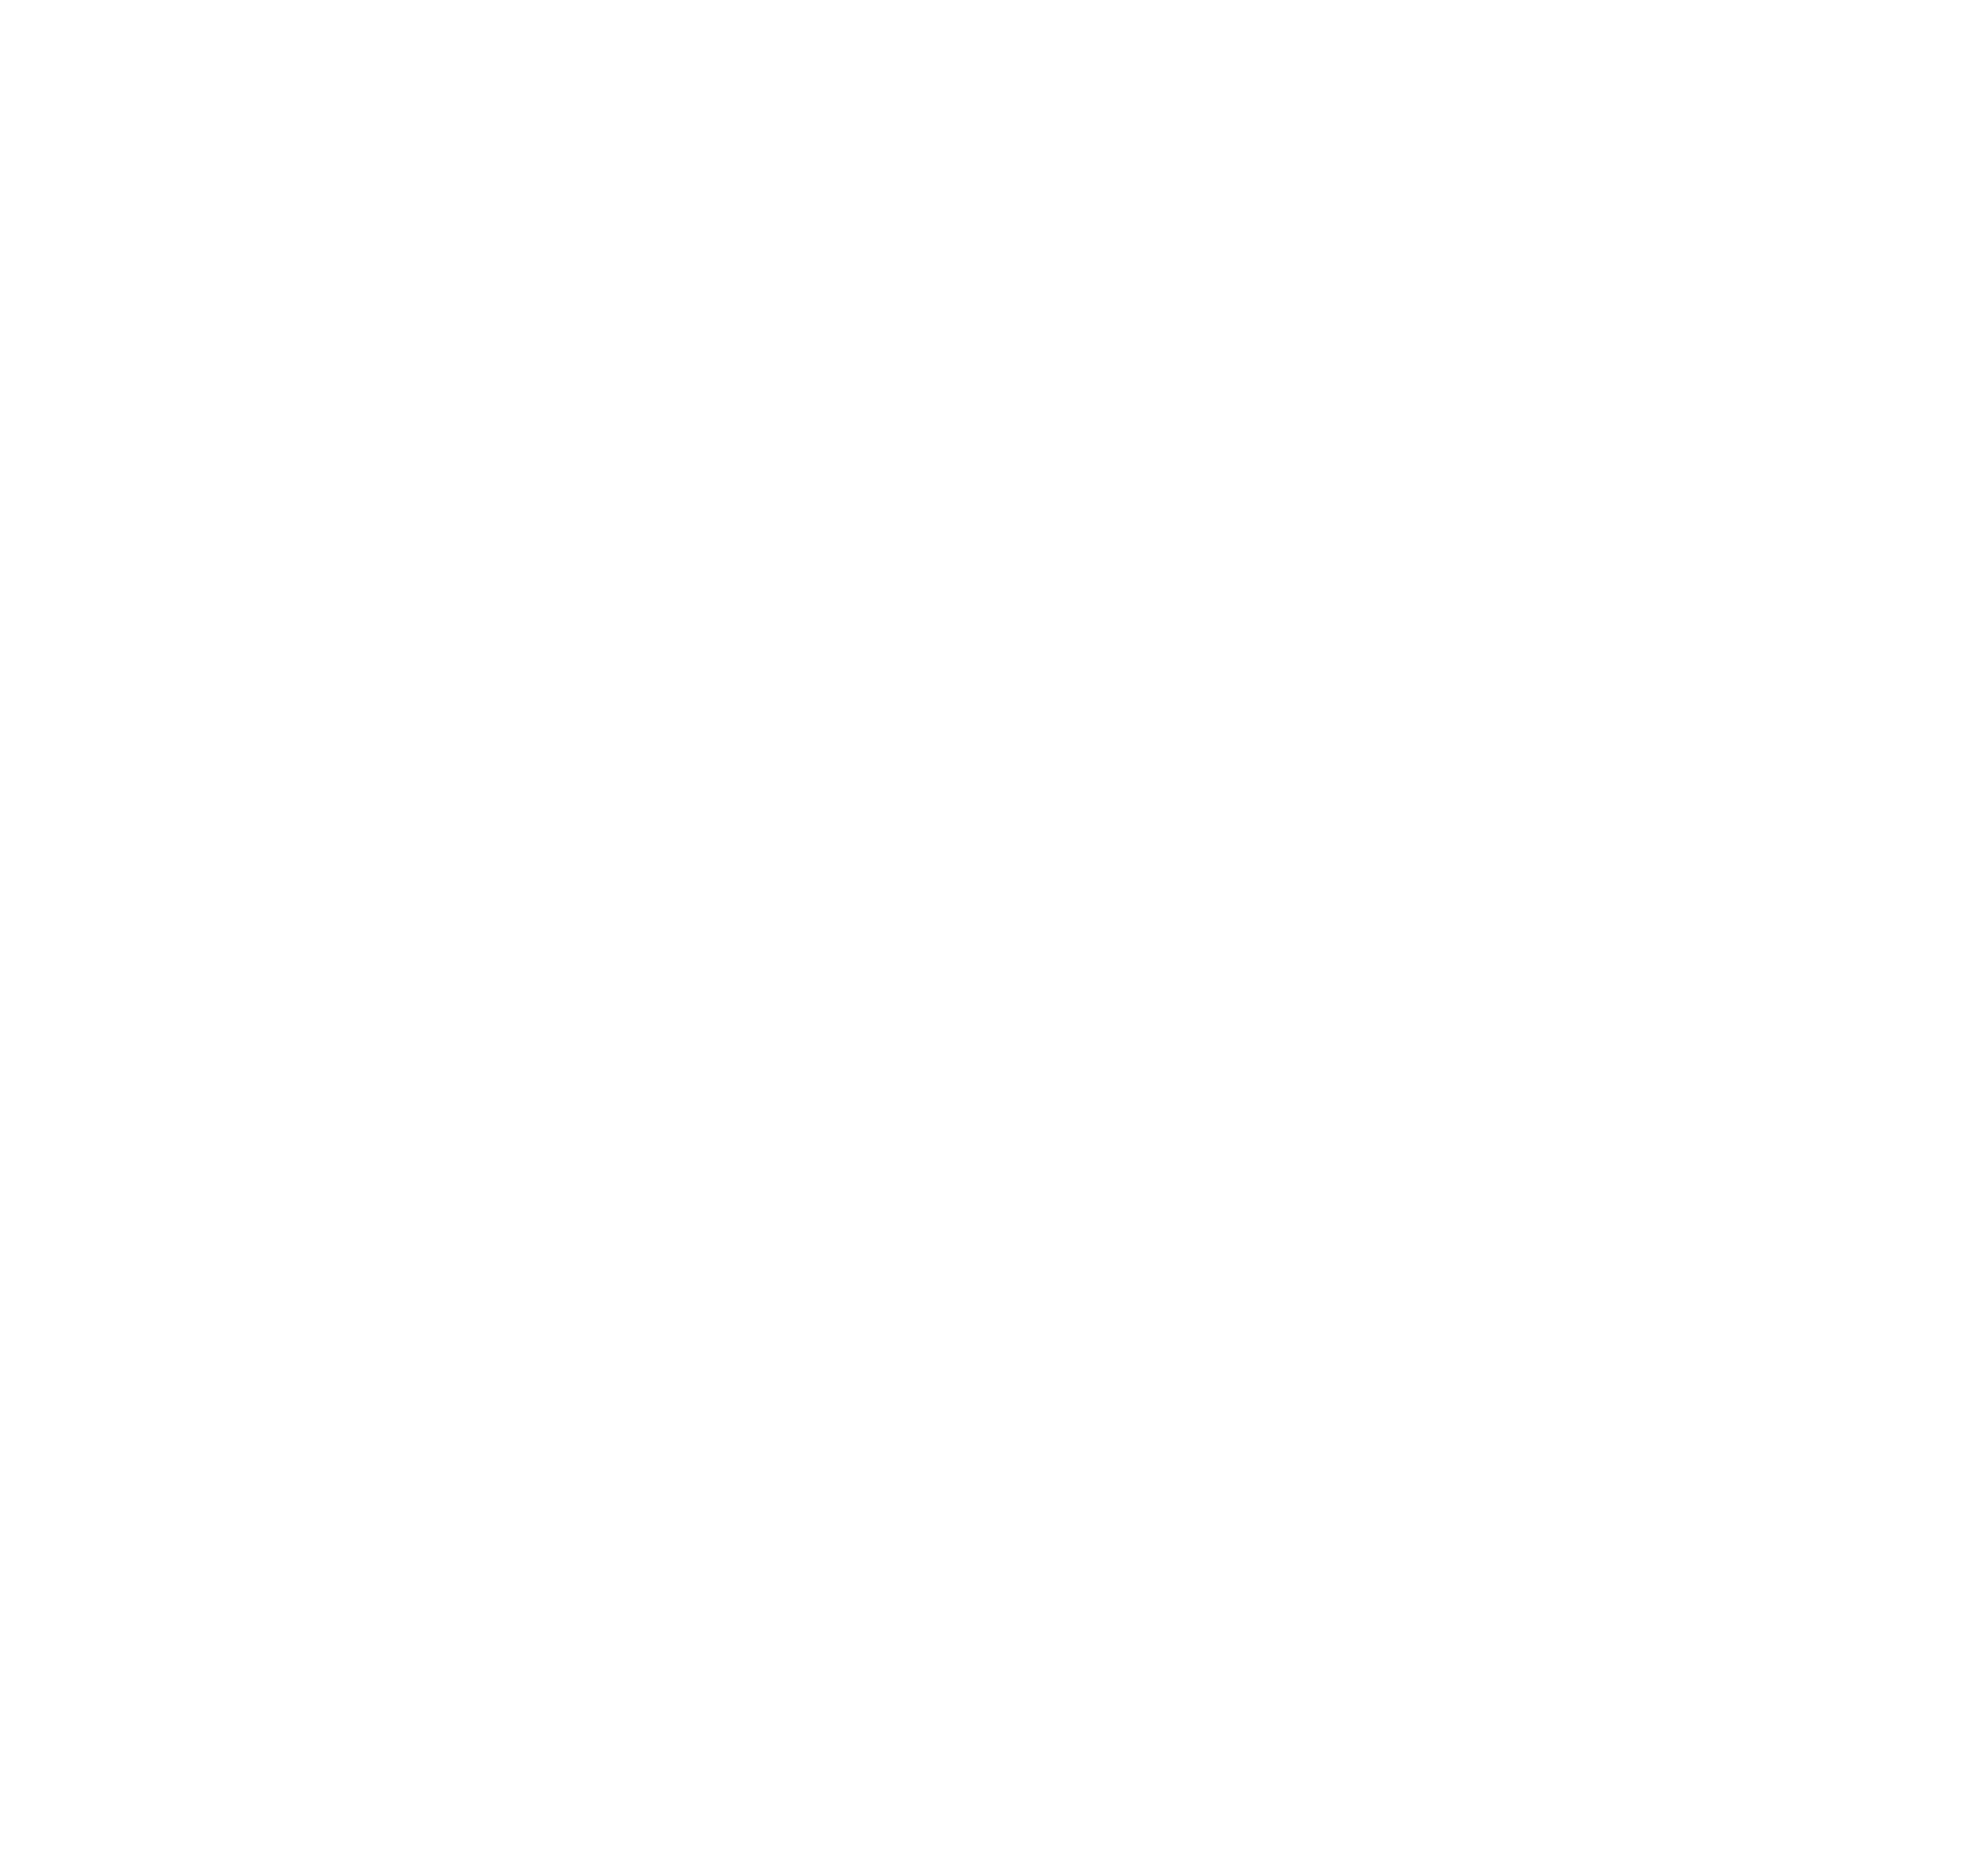 Team Sparkle Productions